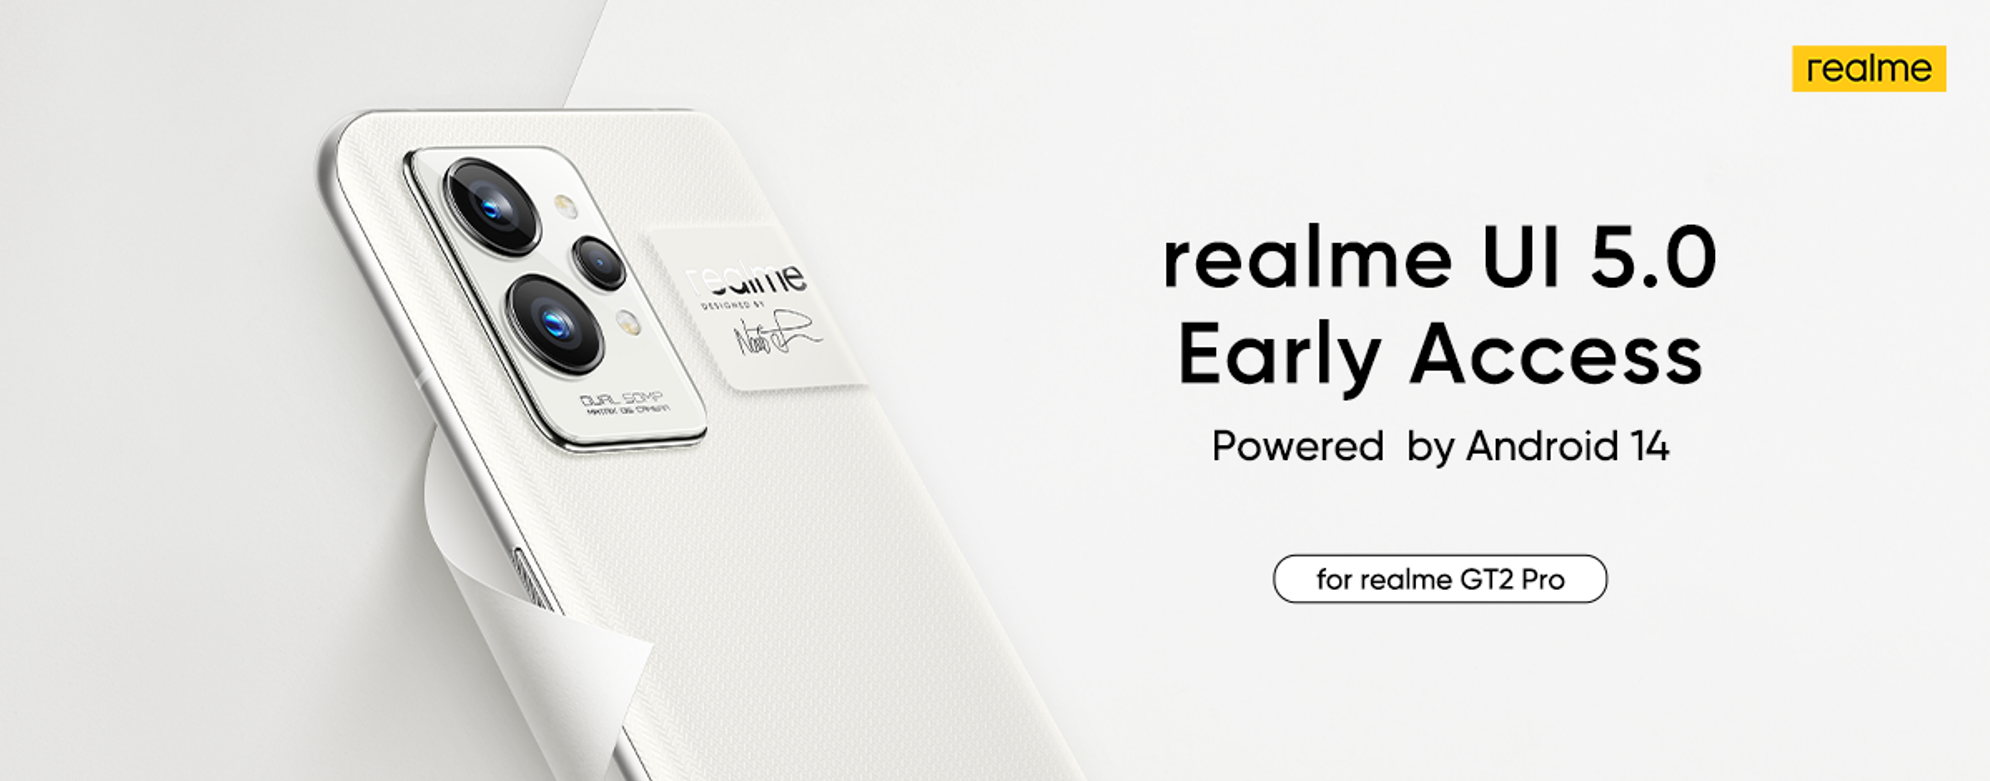 realme UI 5.0 Early Access